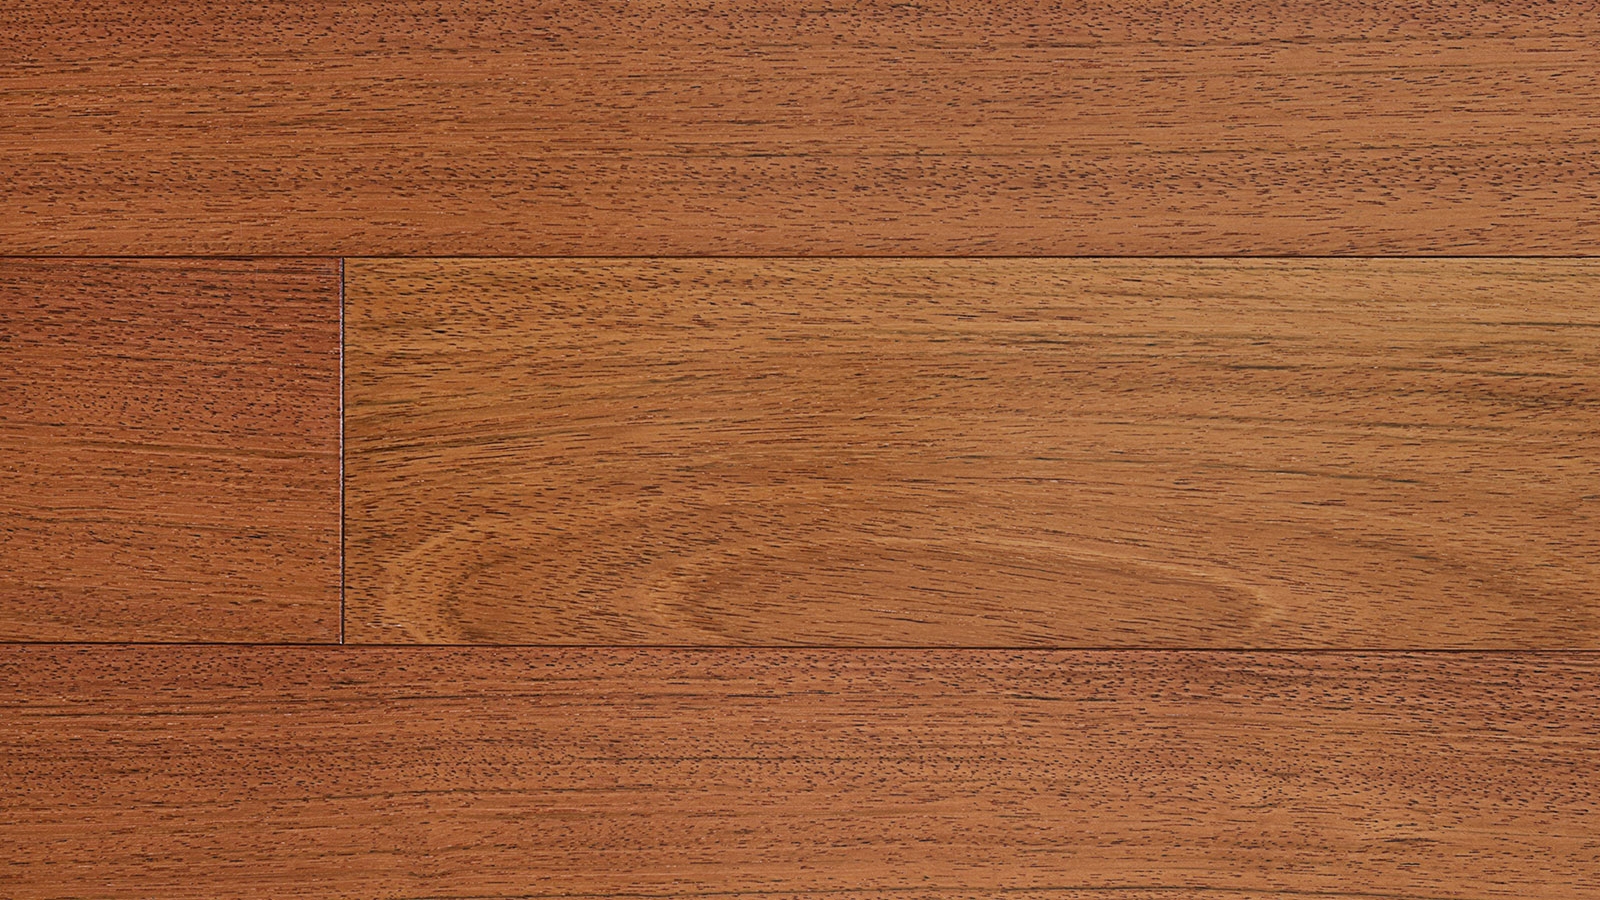 Close-up photo of Santos Mahogany hardwood flooring planks.